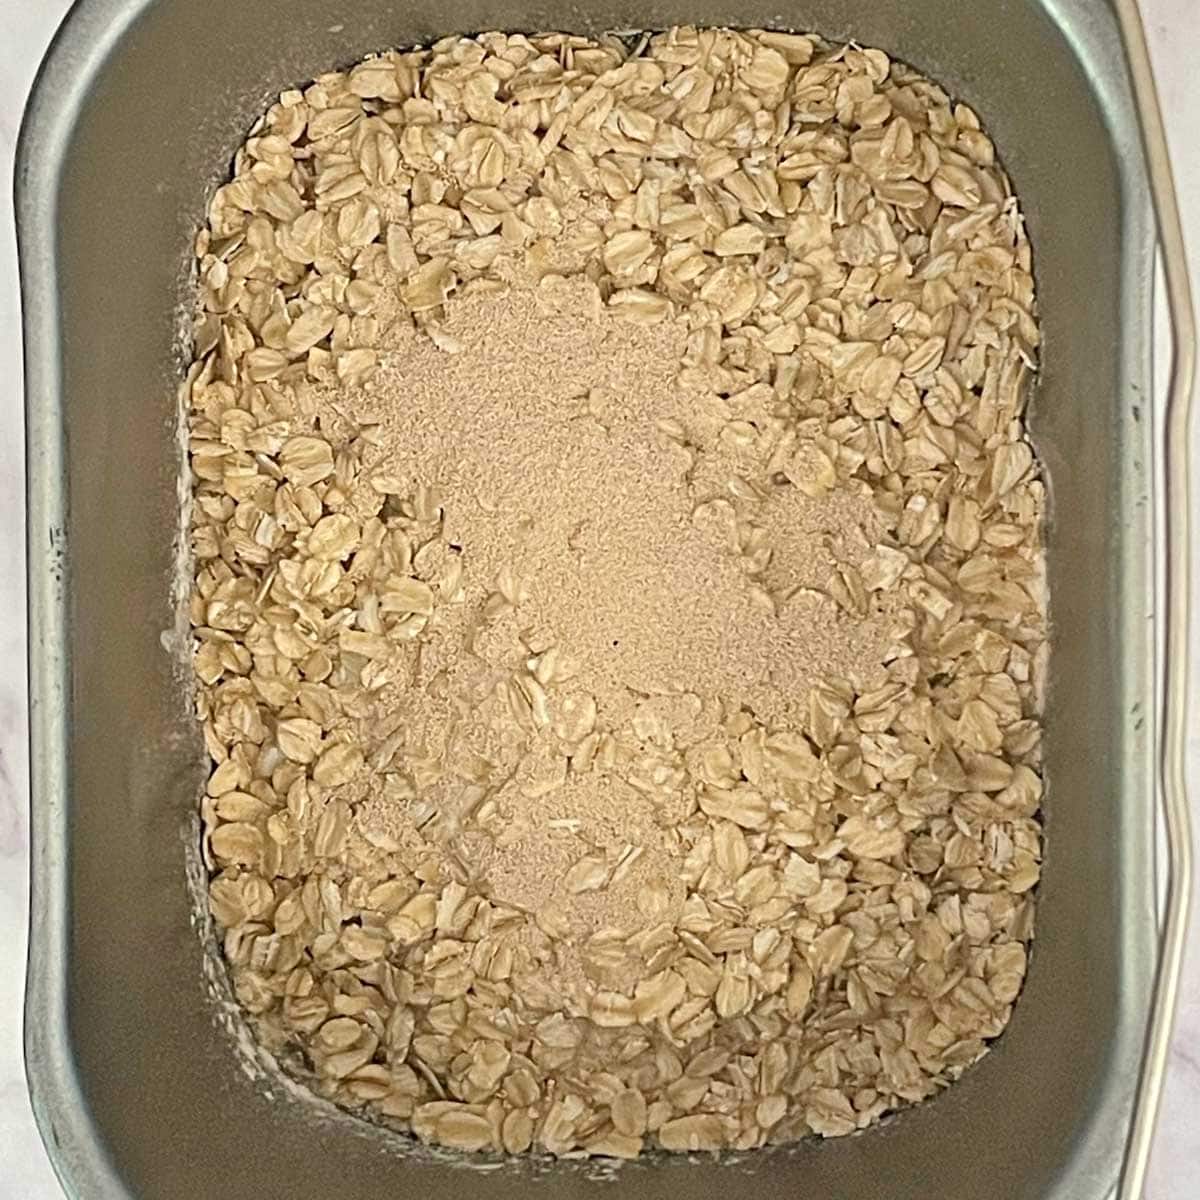 Oatmeal bread ingredients in bread machine pan.